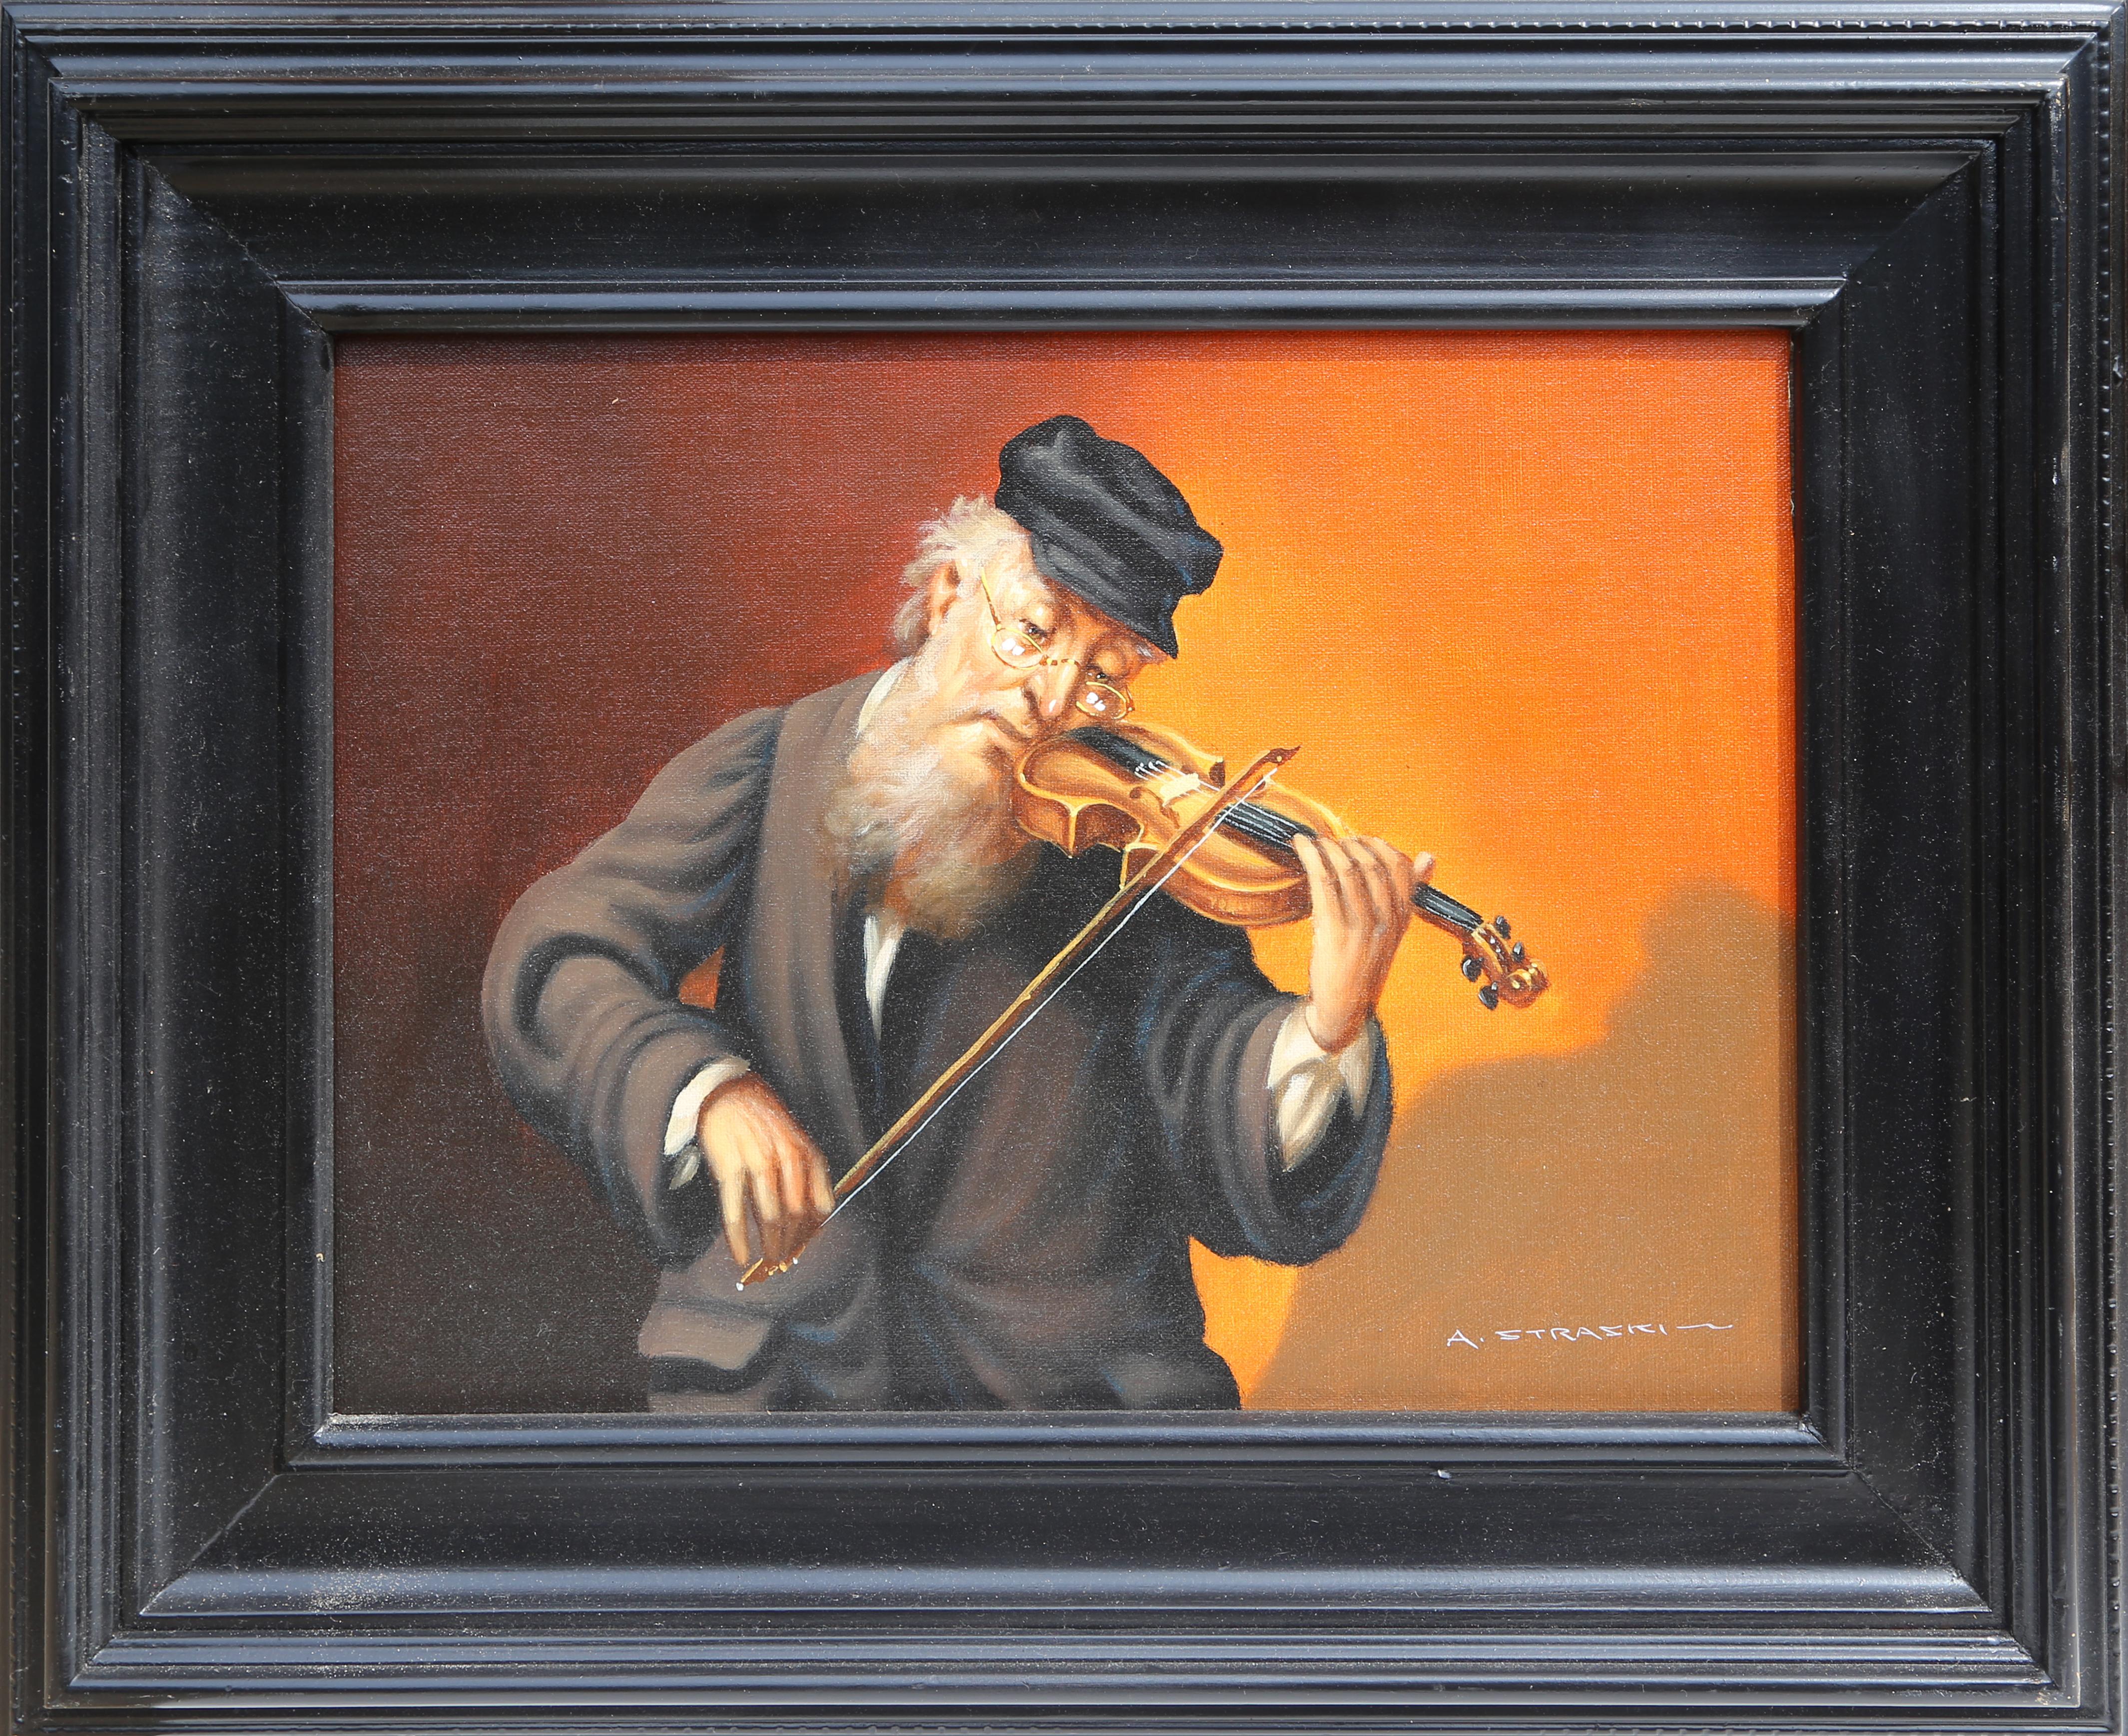 Künstler: Abraham Straski, Pole (1903 - 1987)
Titel: Violinist
Jahr: 1958
Medium: Öl auf Leinwand, signiert v.l.n.r.
Bildgröße:  12 x 15 Zoll
Rahmengröße: 20 x 22,5 Zoll
